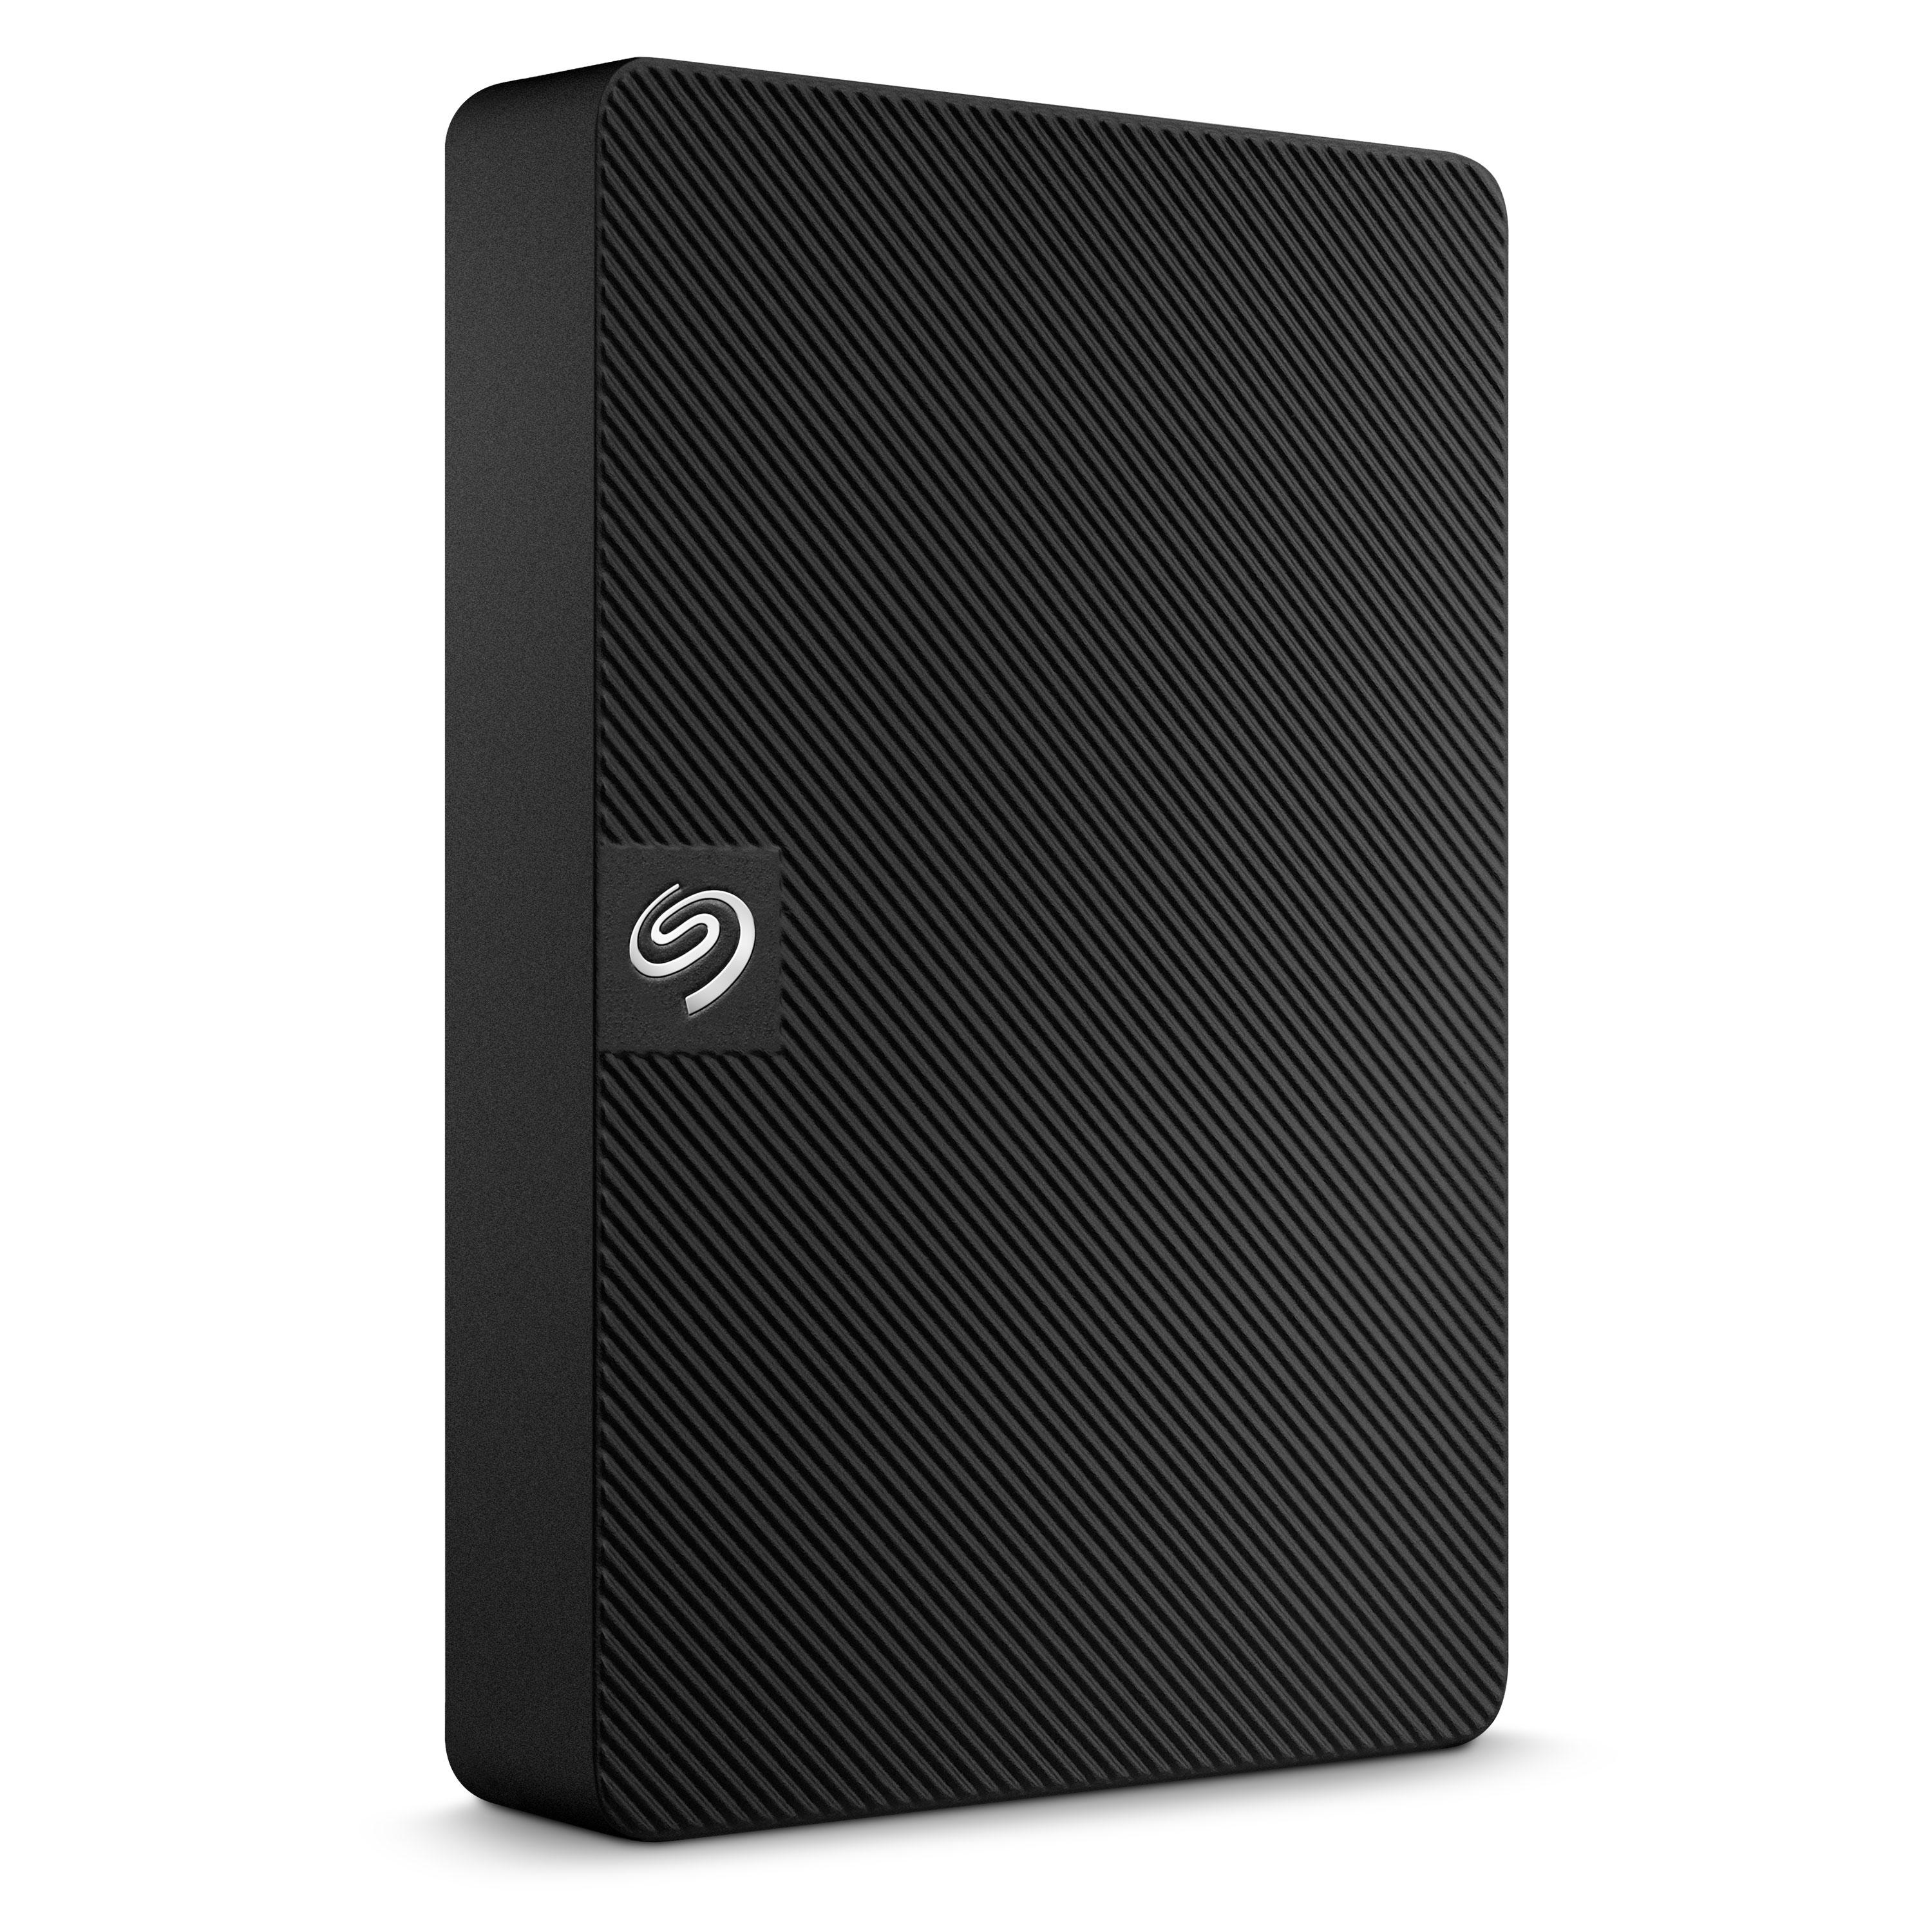 SEAGATE Expansion Portable Hard Drive - 5 TB, Black